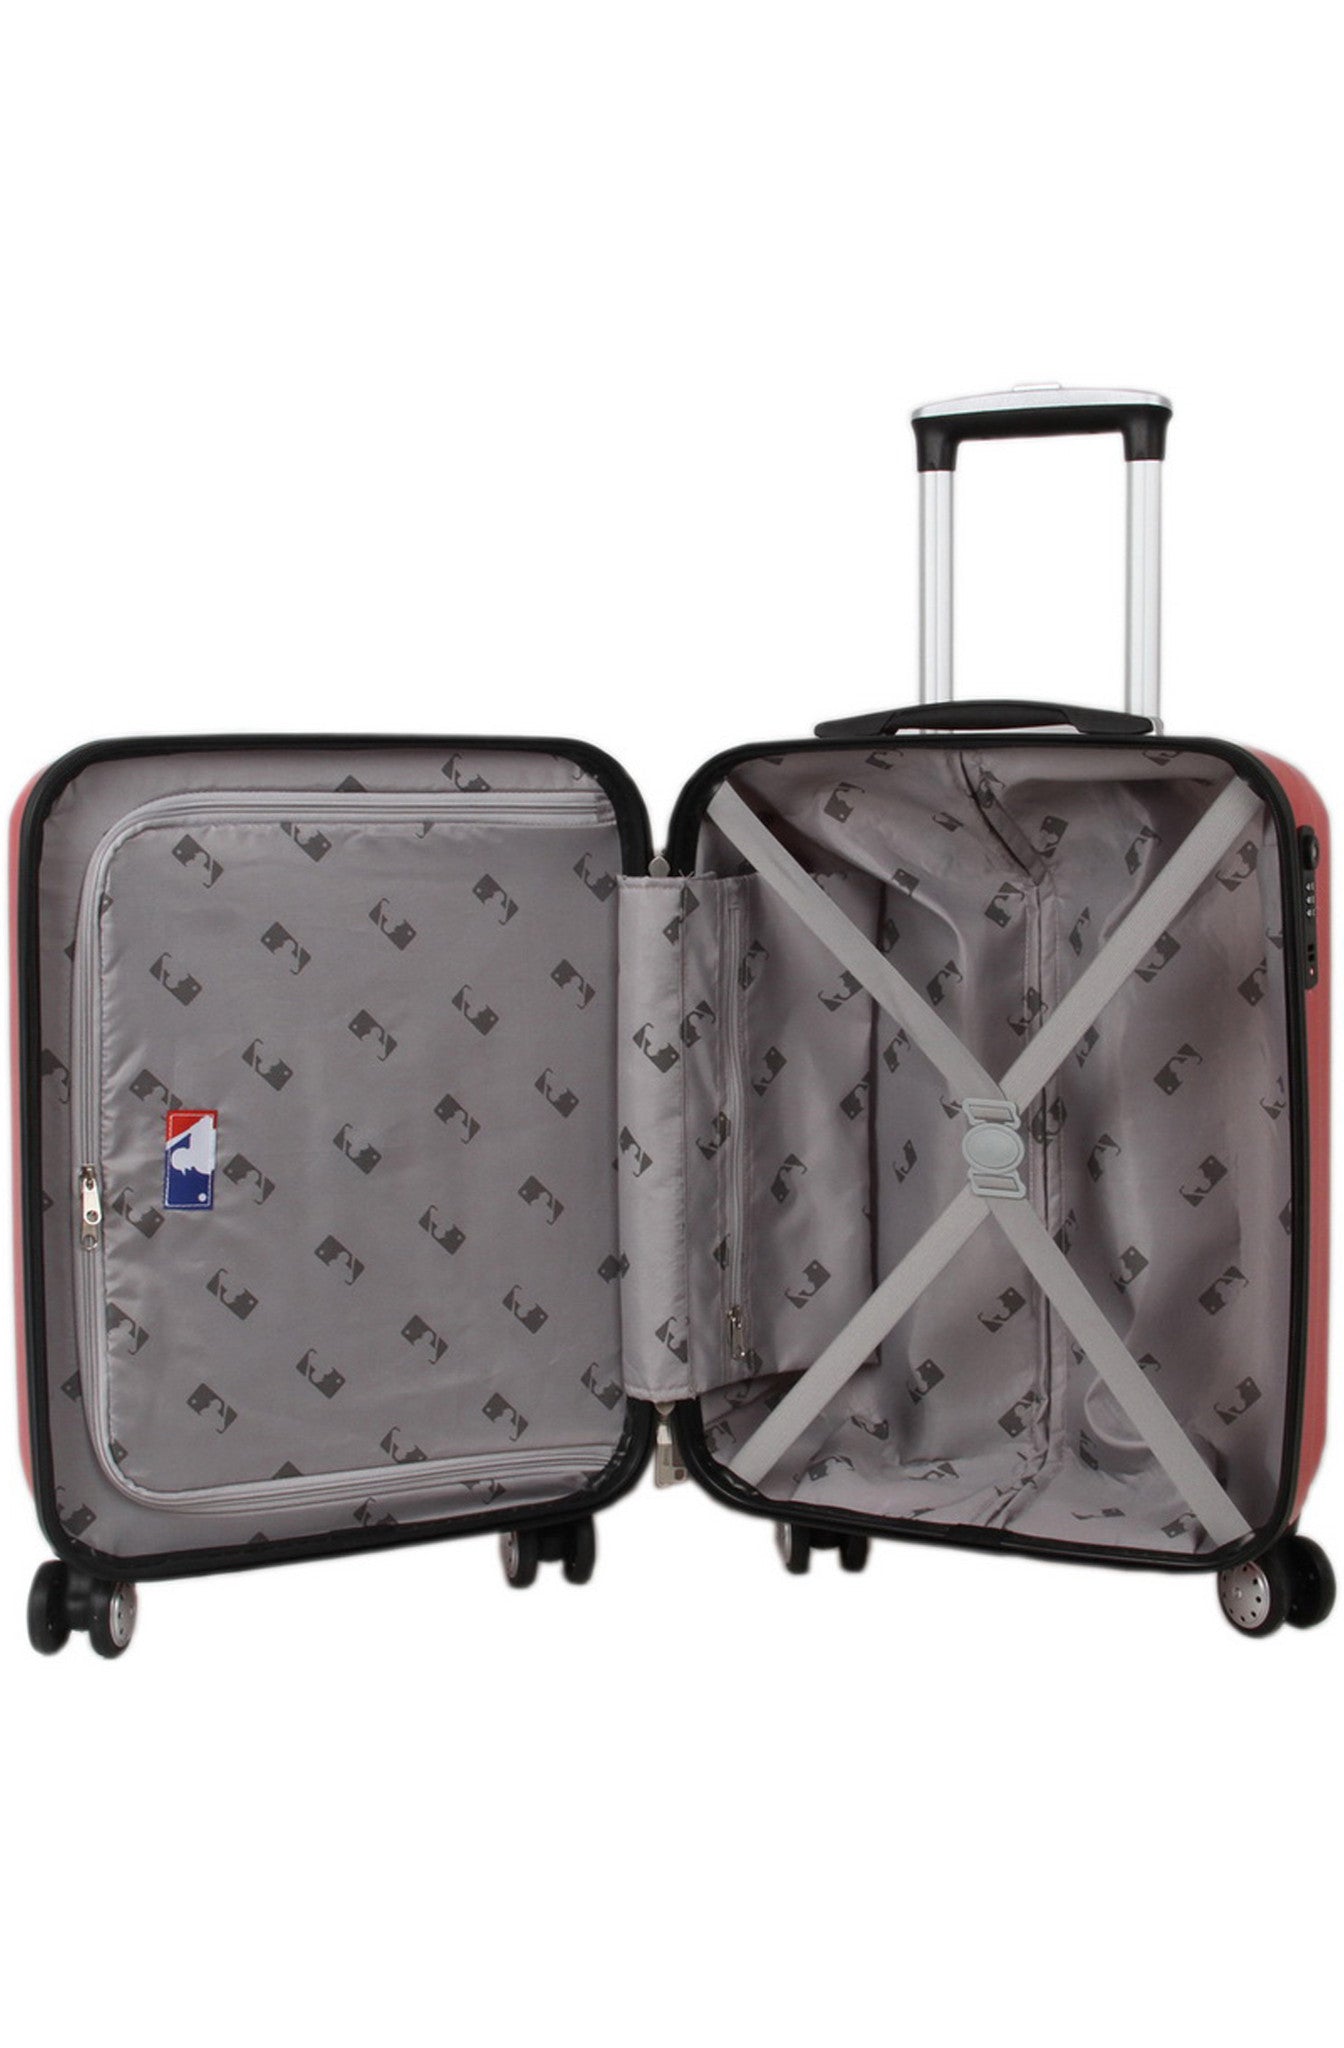 Texas Rangers, 19" Premium Molded Luggage by Kaybull #TEX-19PCF-IFD - OBM Distribution, Inc.